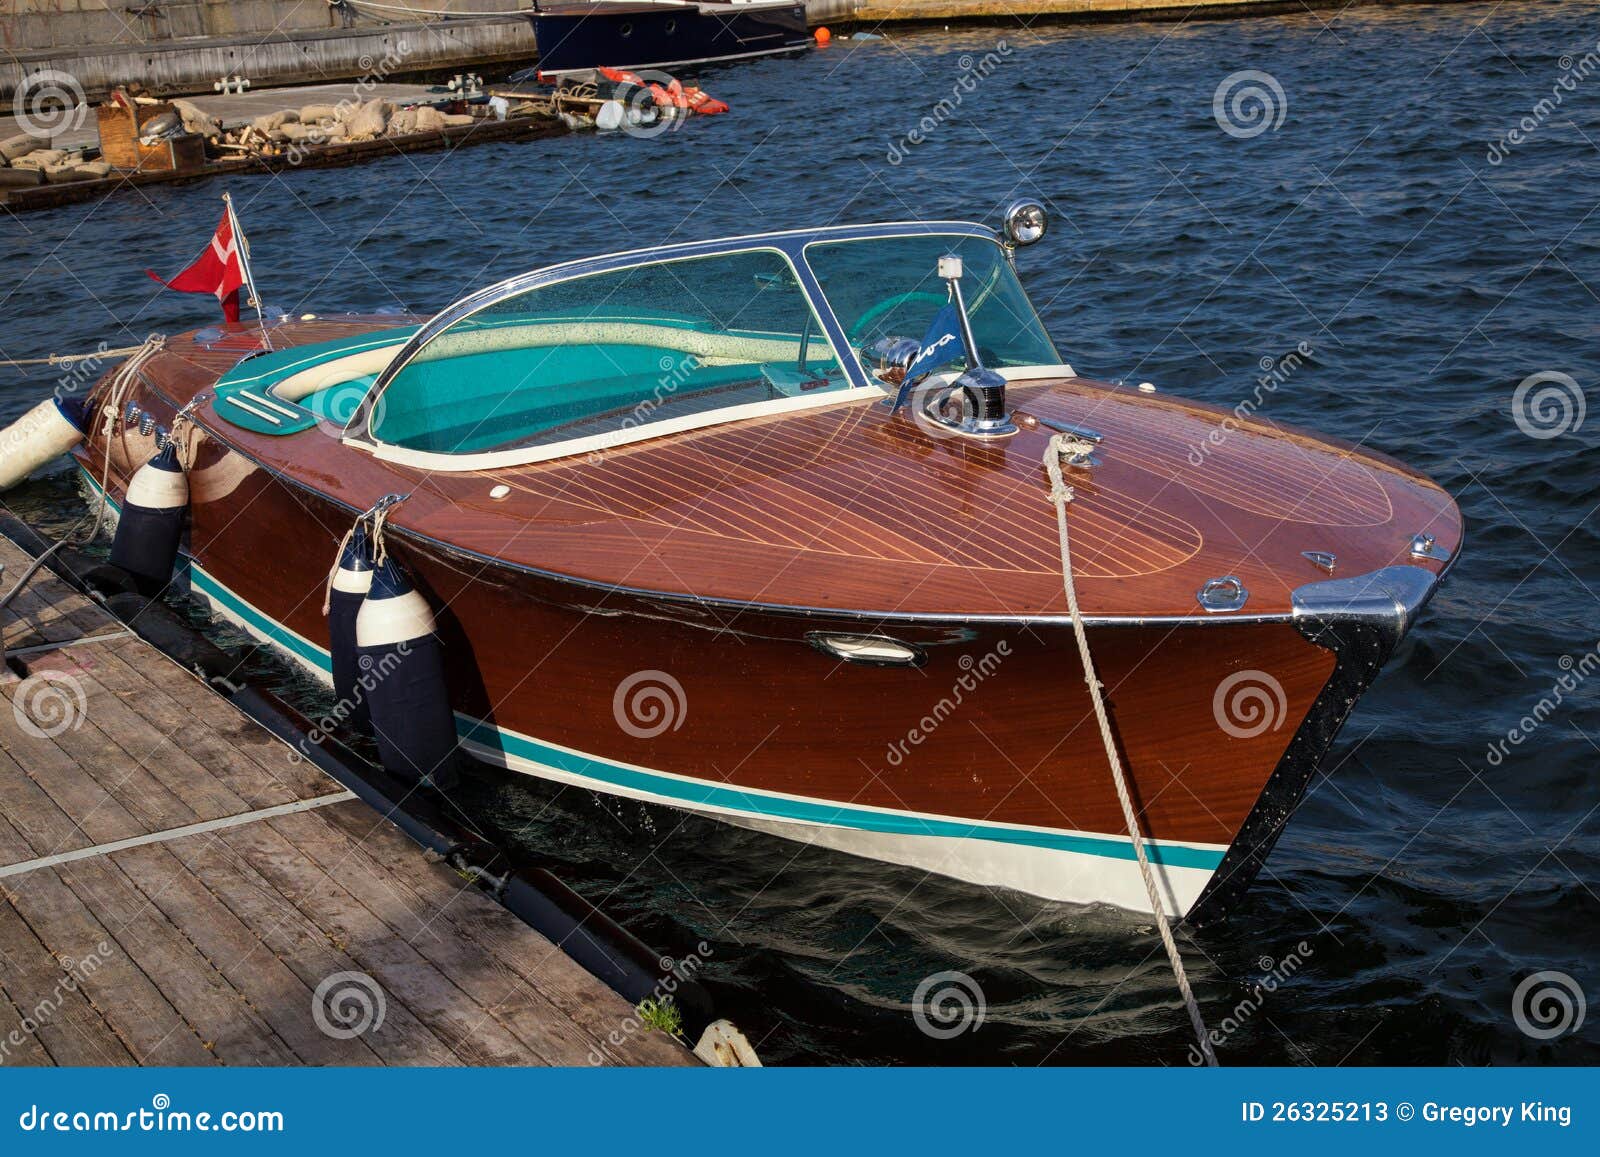 classic speedboat